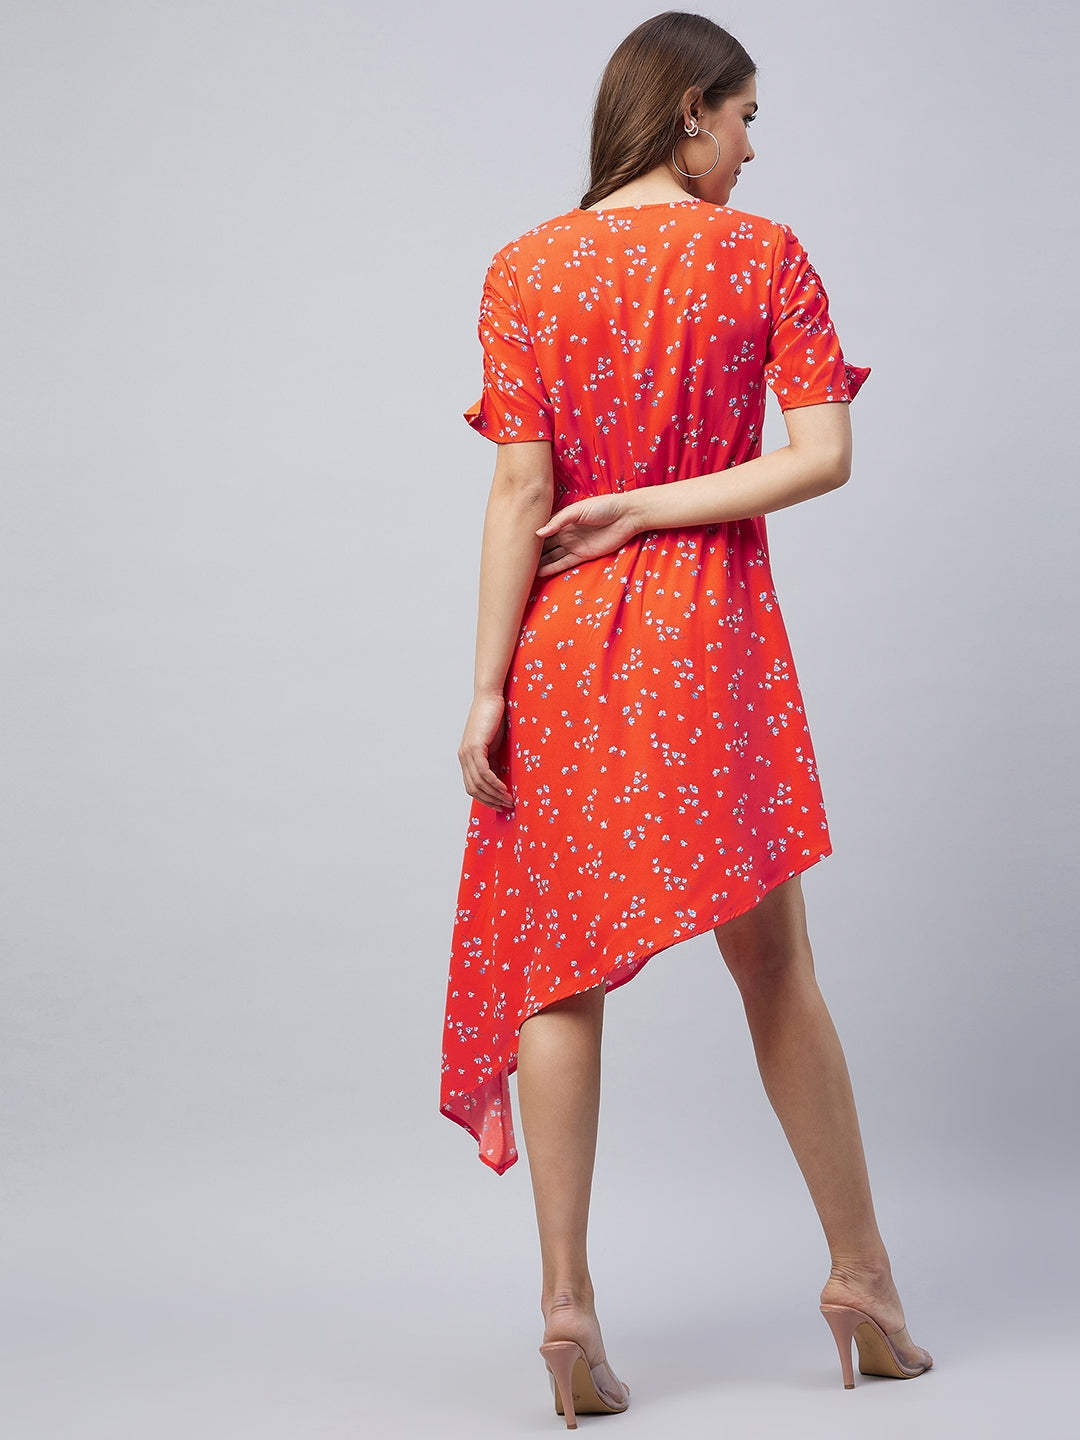 Women's Orange Floral Print Dress